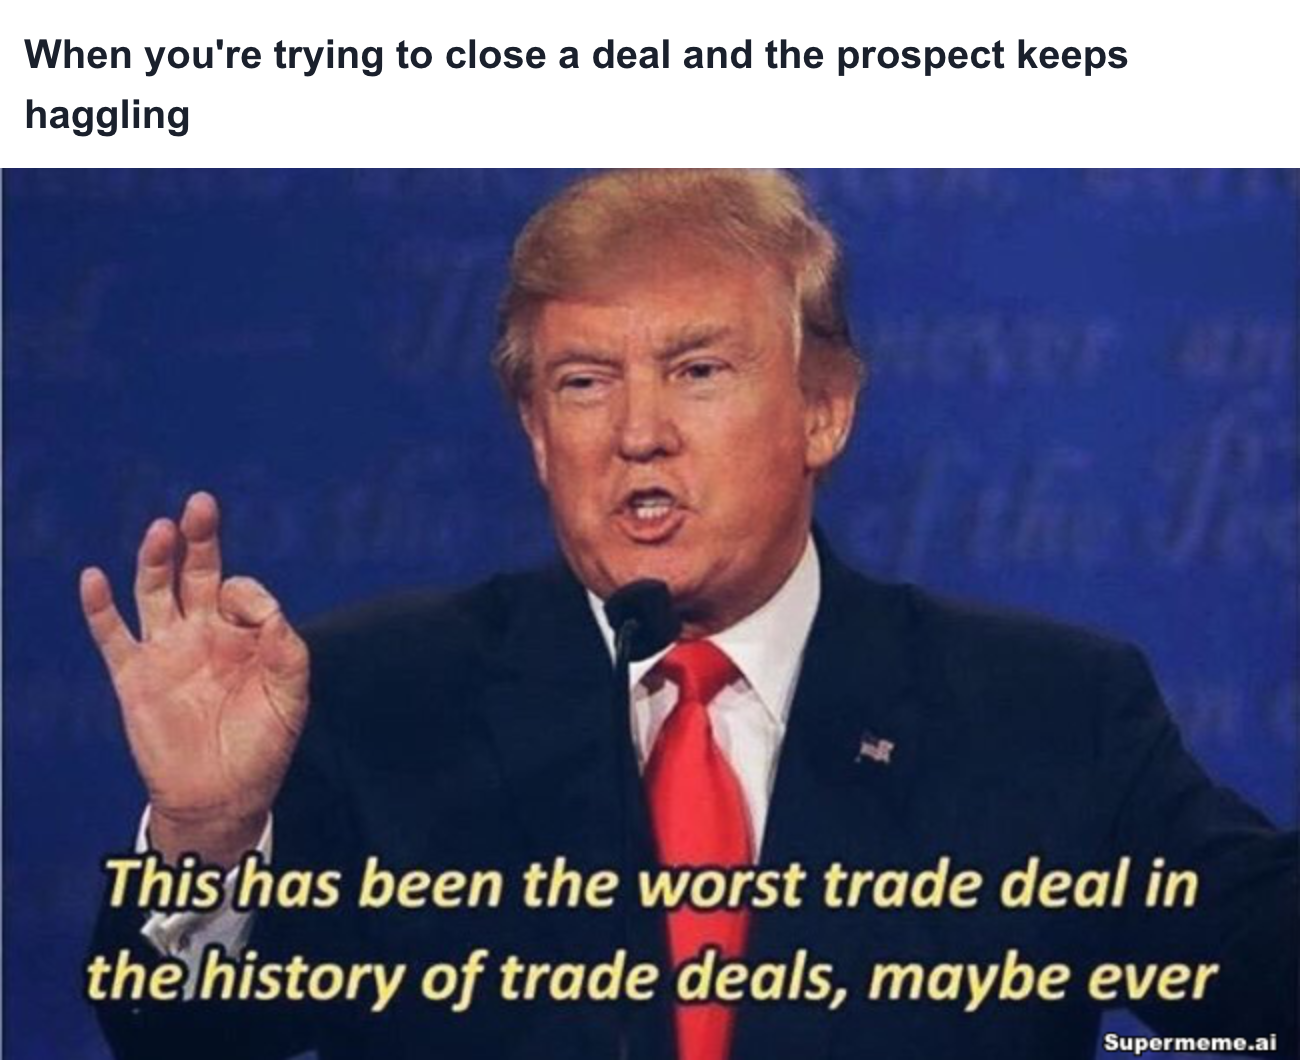 sales meme on closing a deal